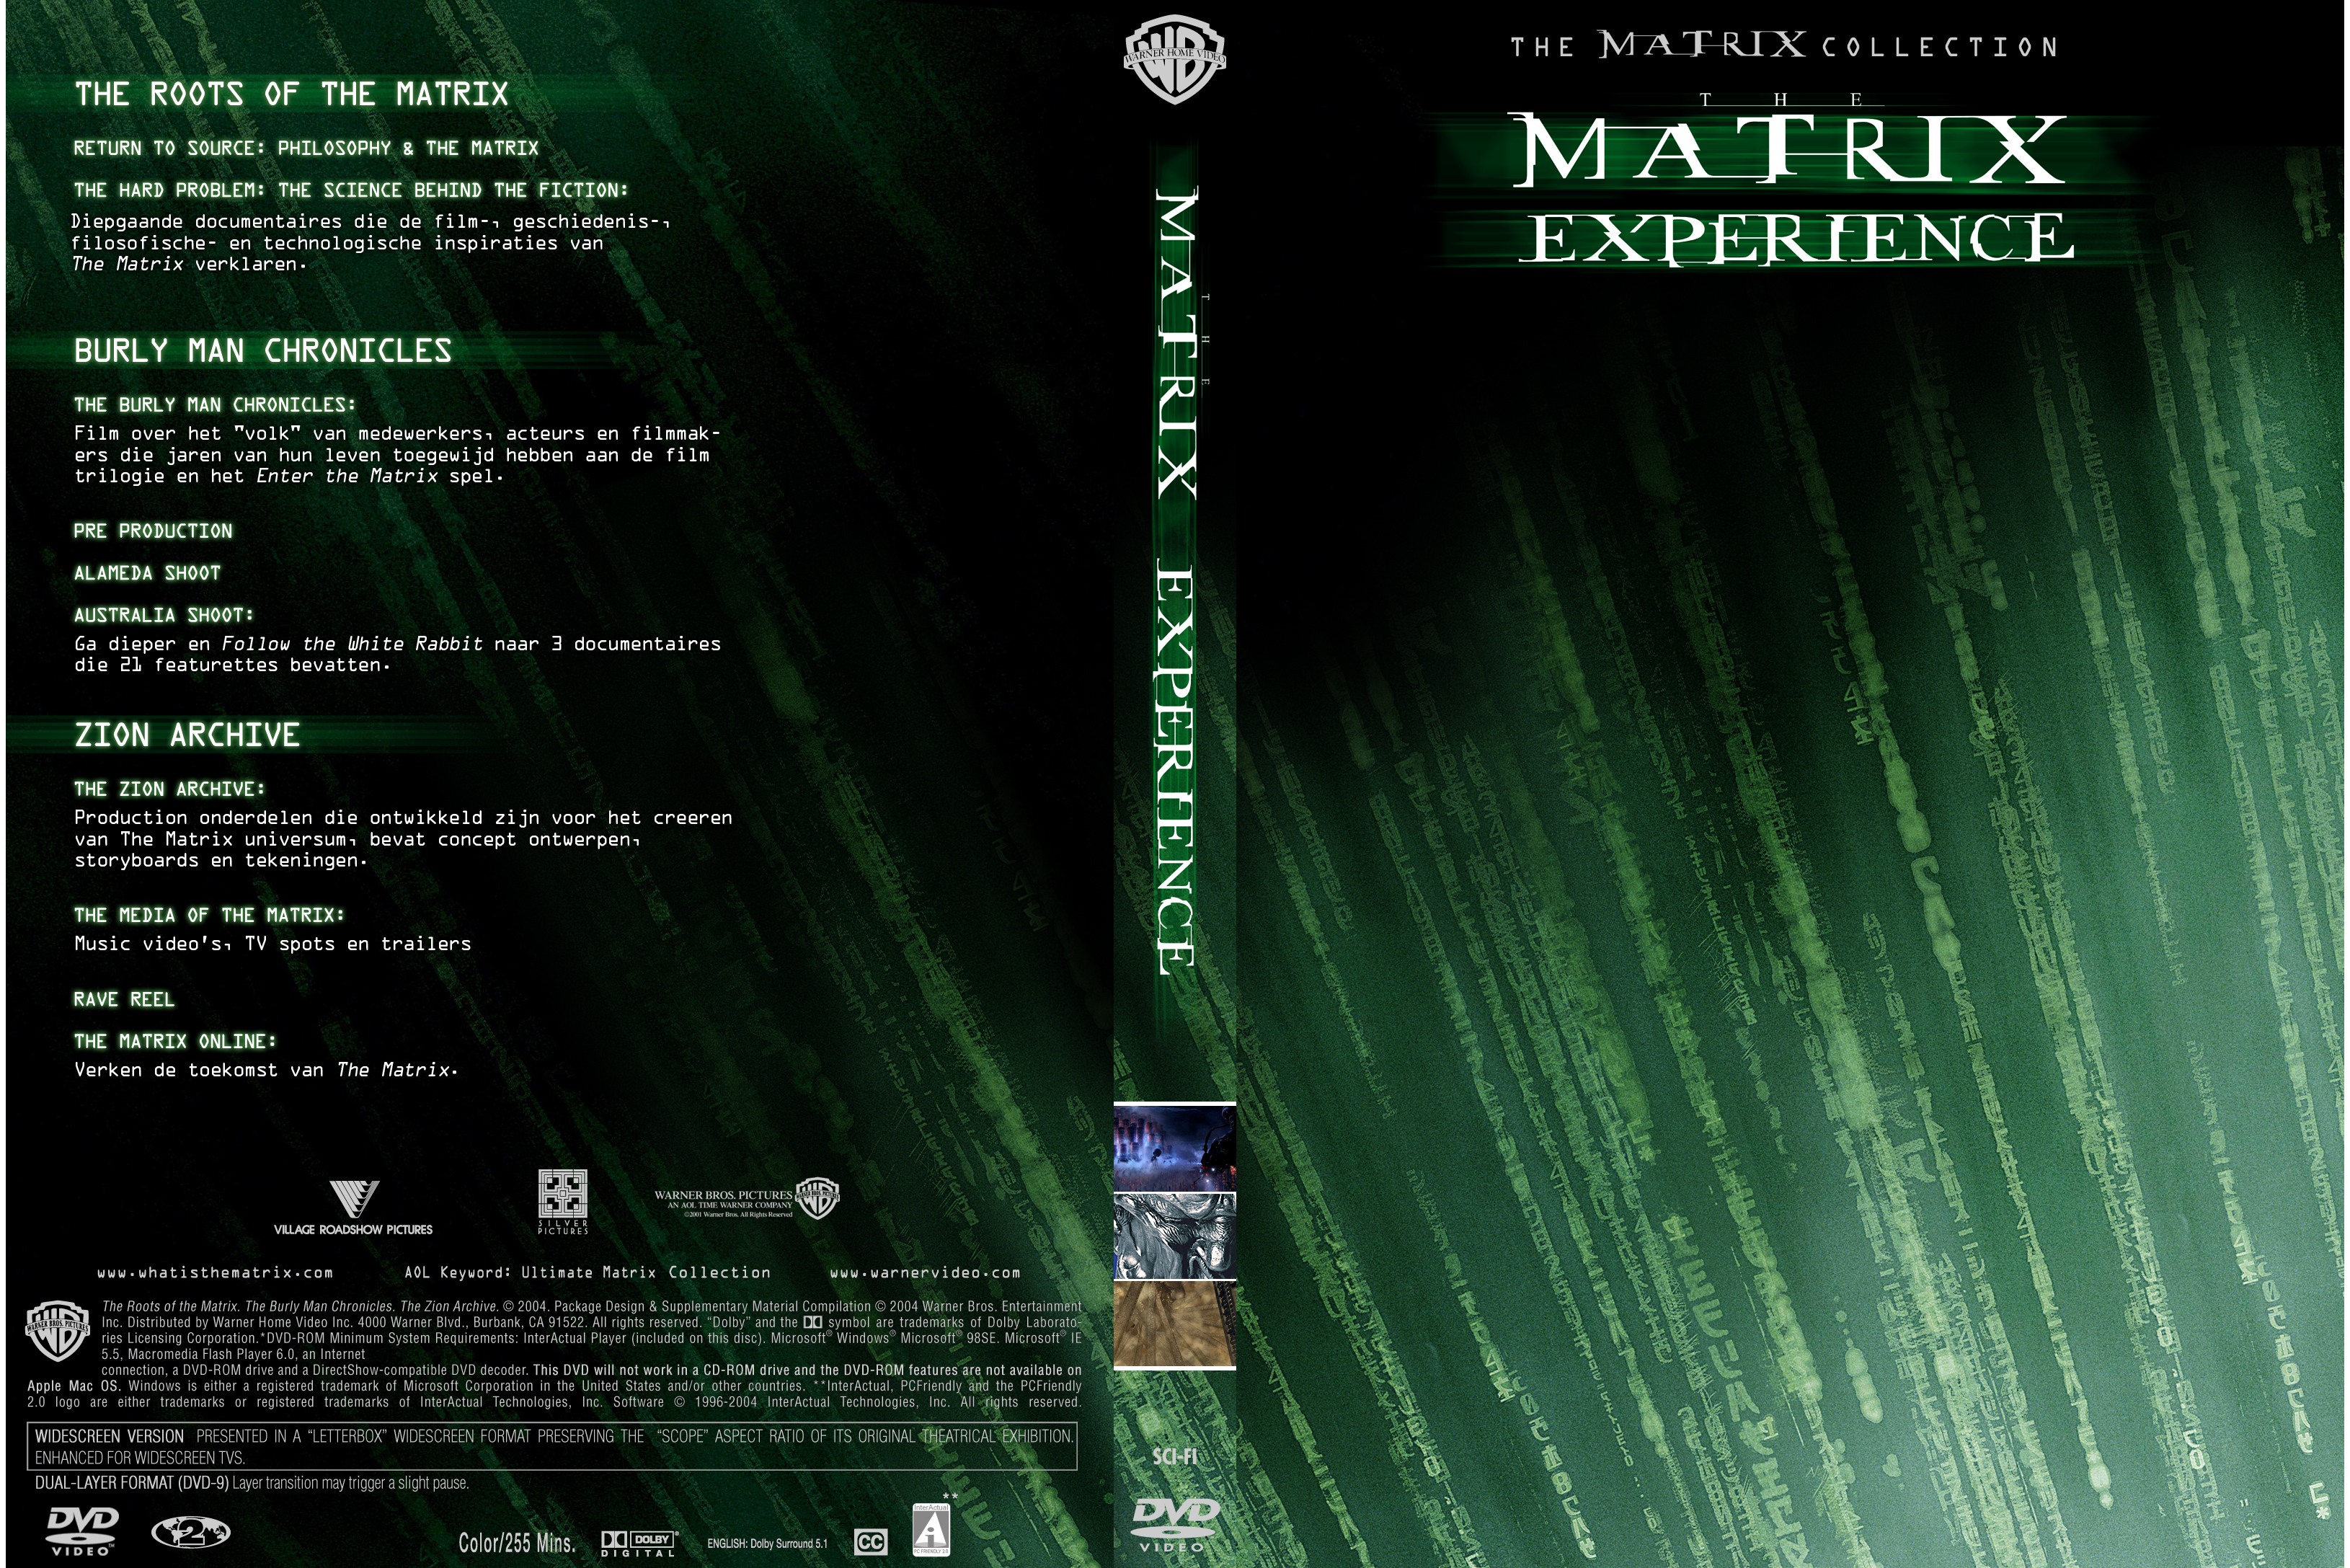 The Matrix Experience